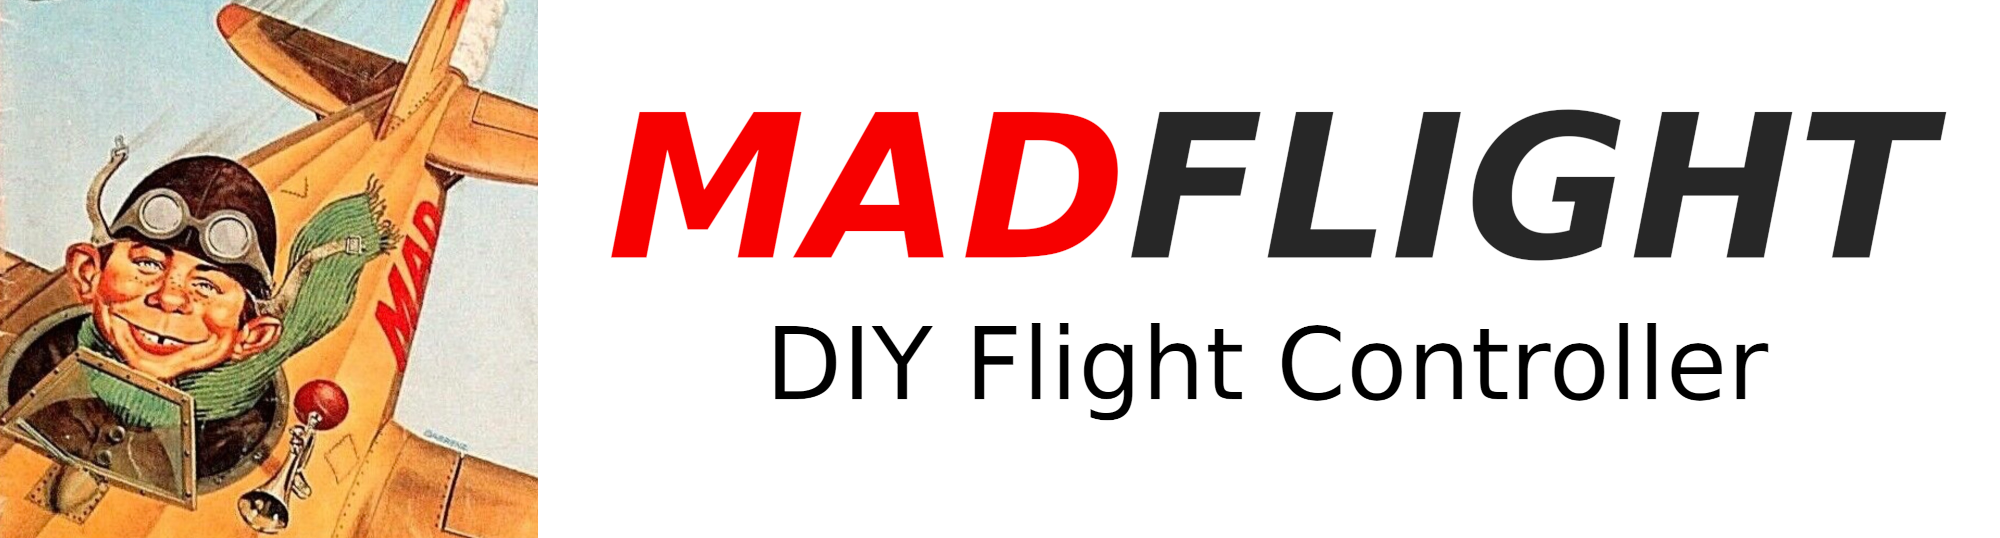 madflight_logo_2000x538.png